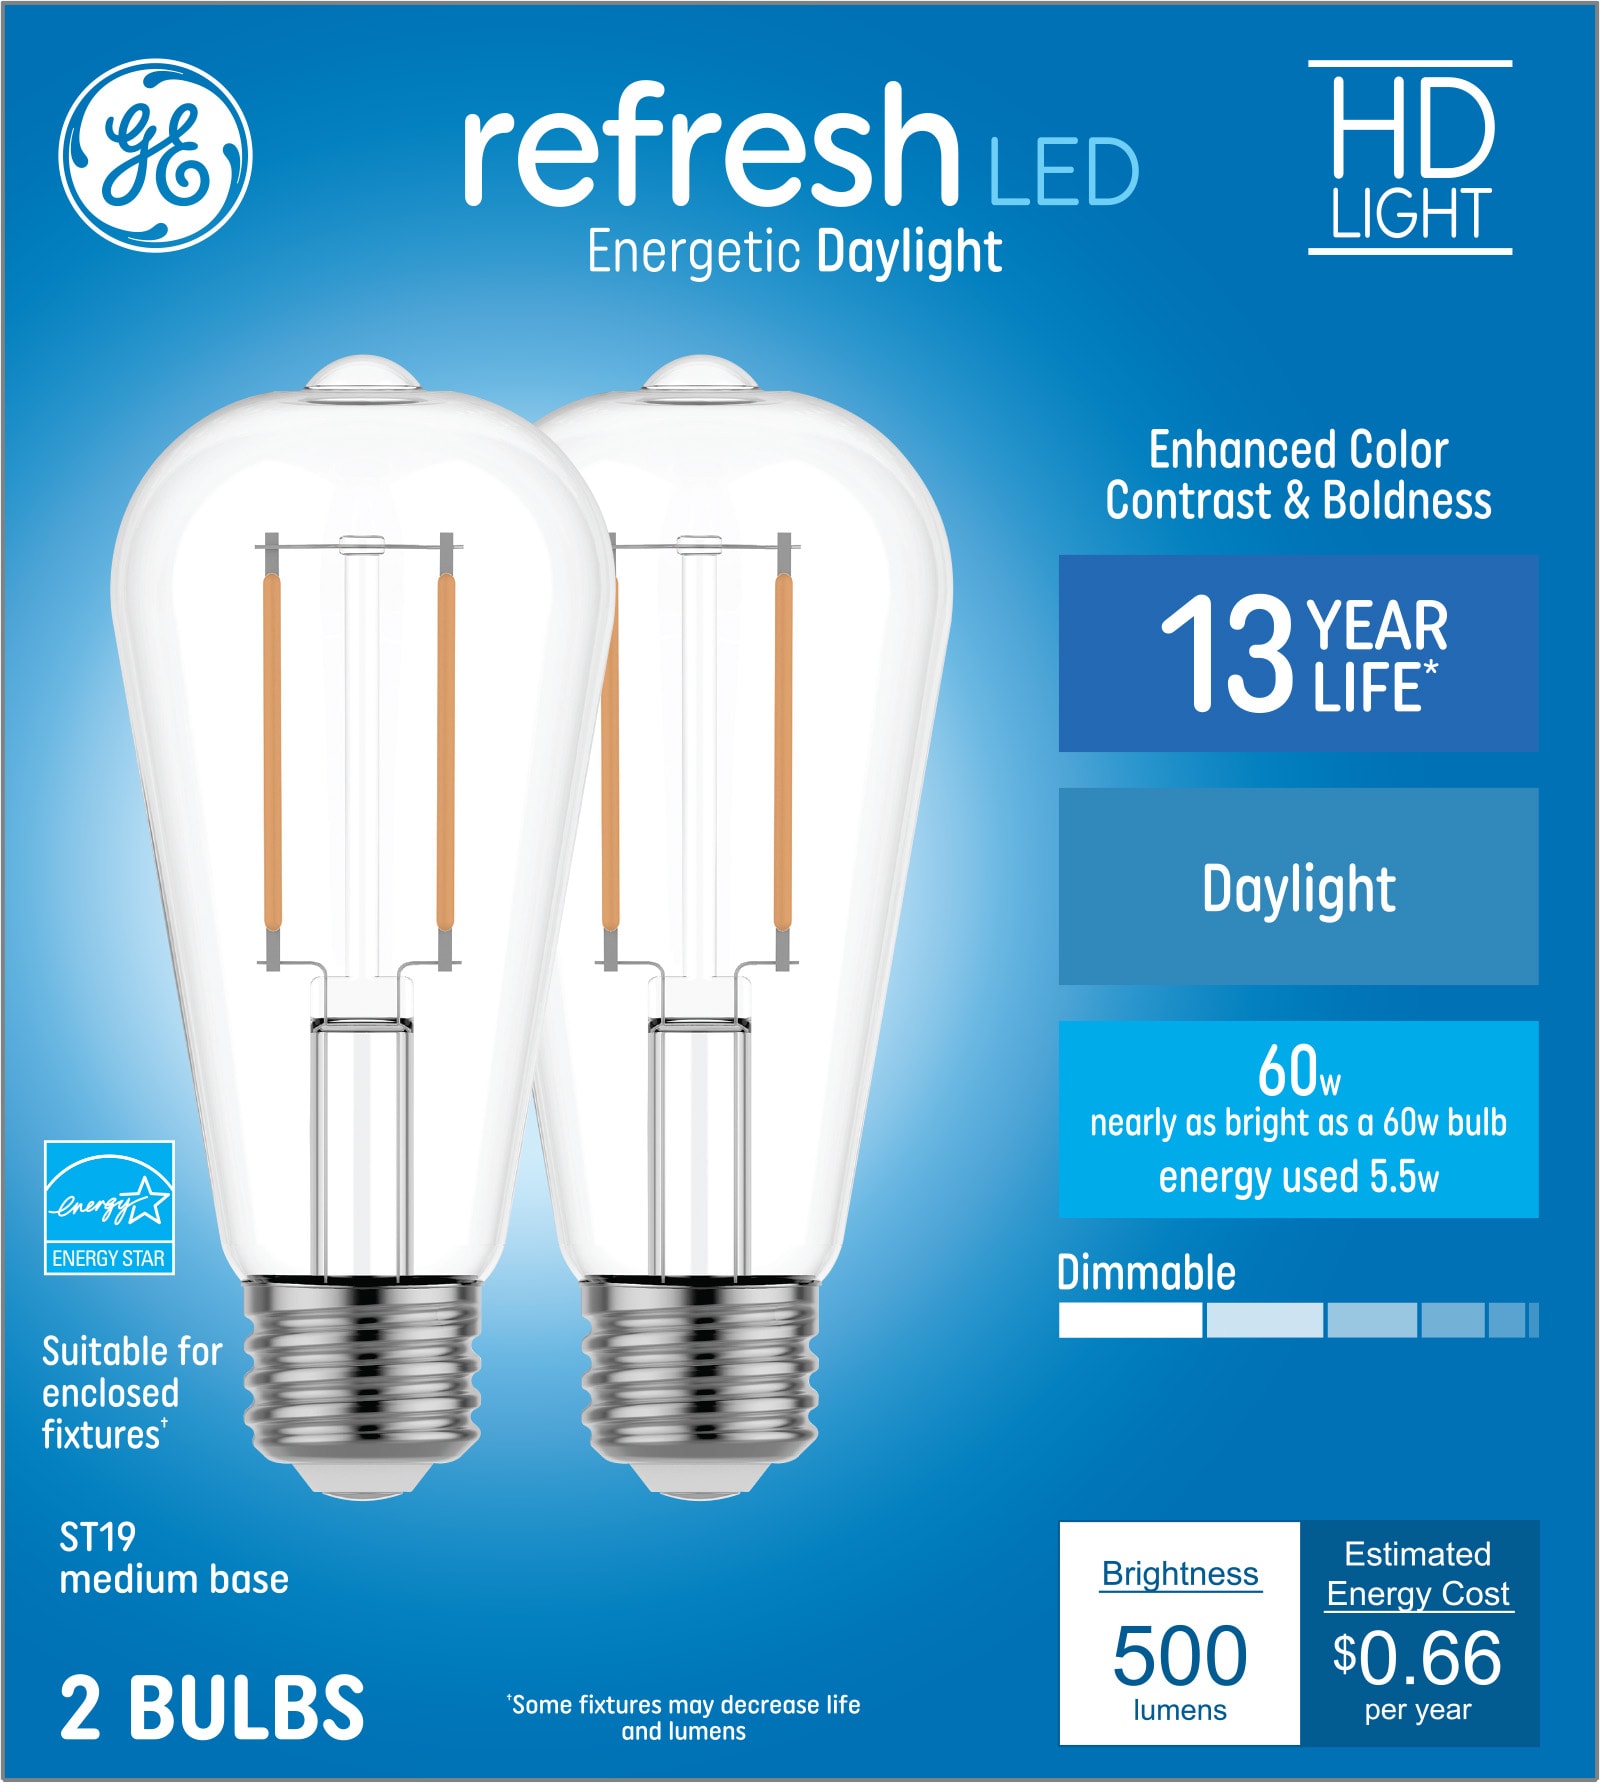 4.5W LED A15 Daylight Clear Refrigerator Light Bulb - 1 Pk by GE at Fleet  Farm